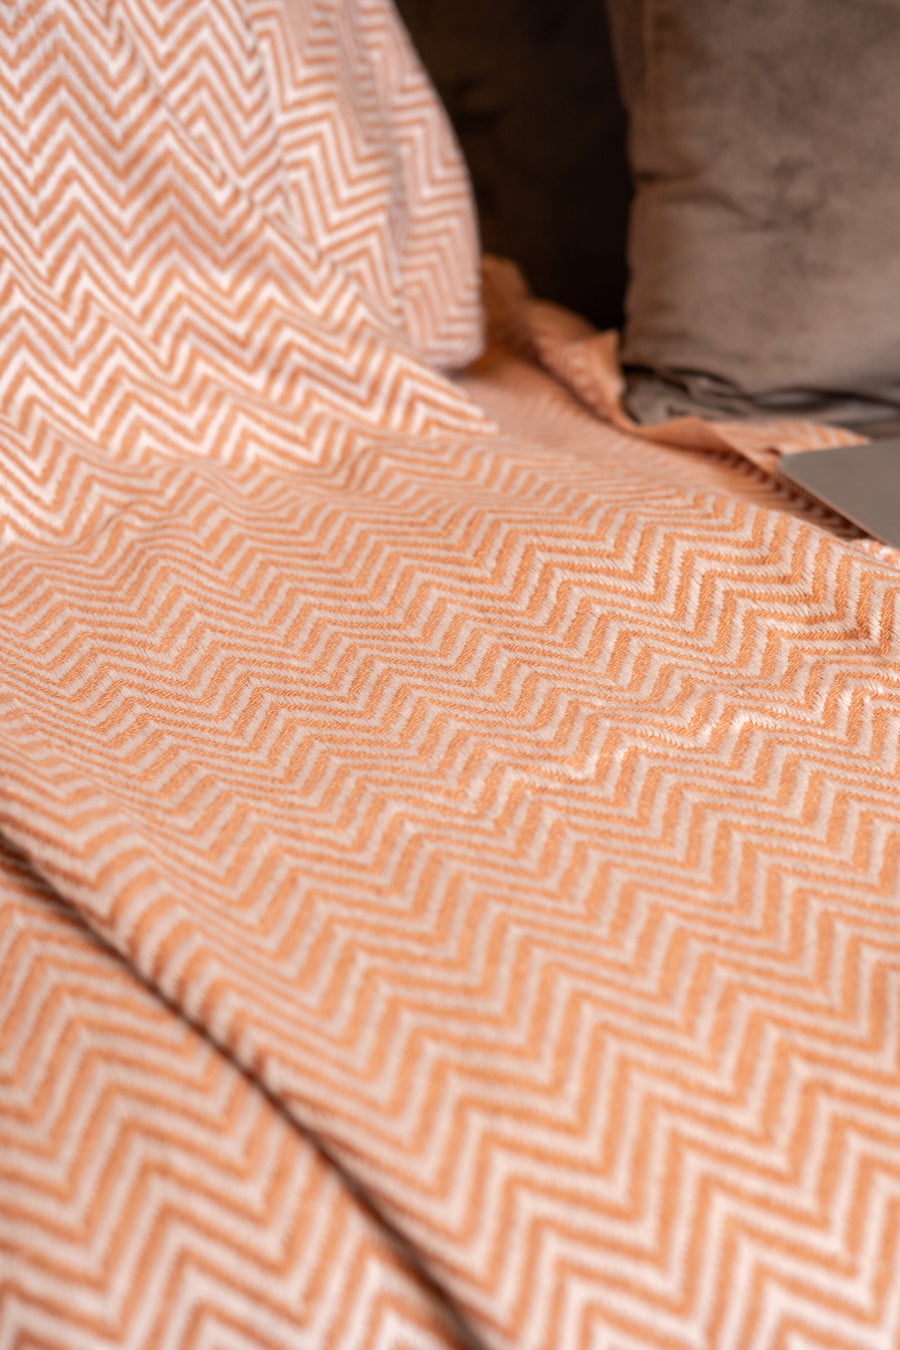 OMVAI Zig Zag Patterned Woven Throw Blanket / Comforter Caramel